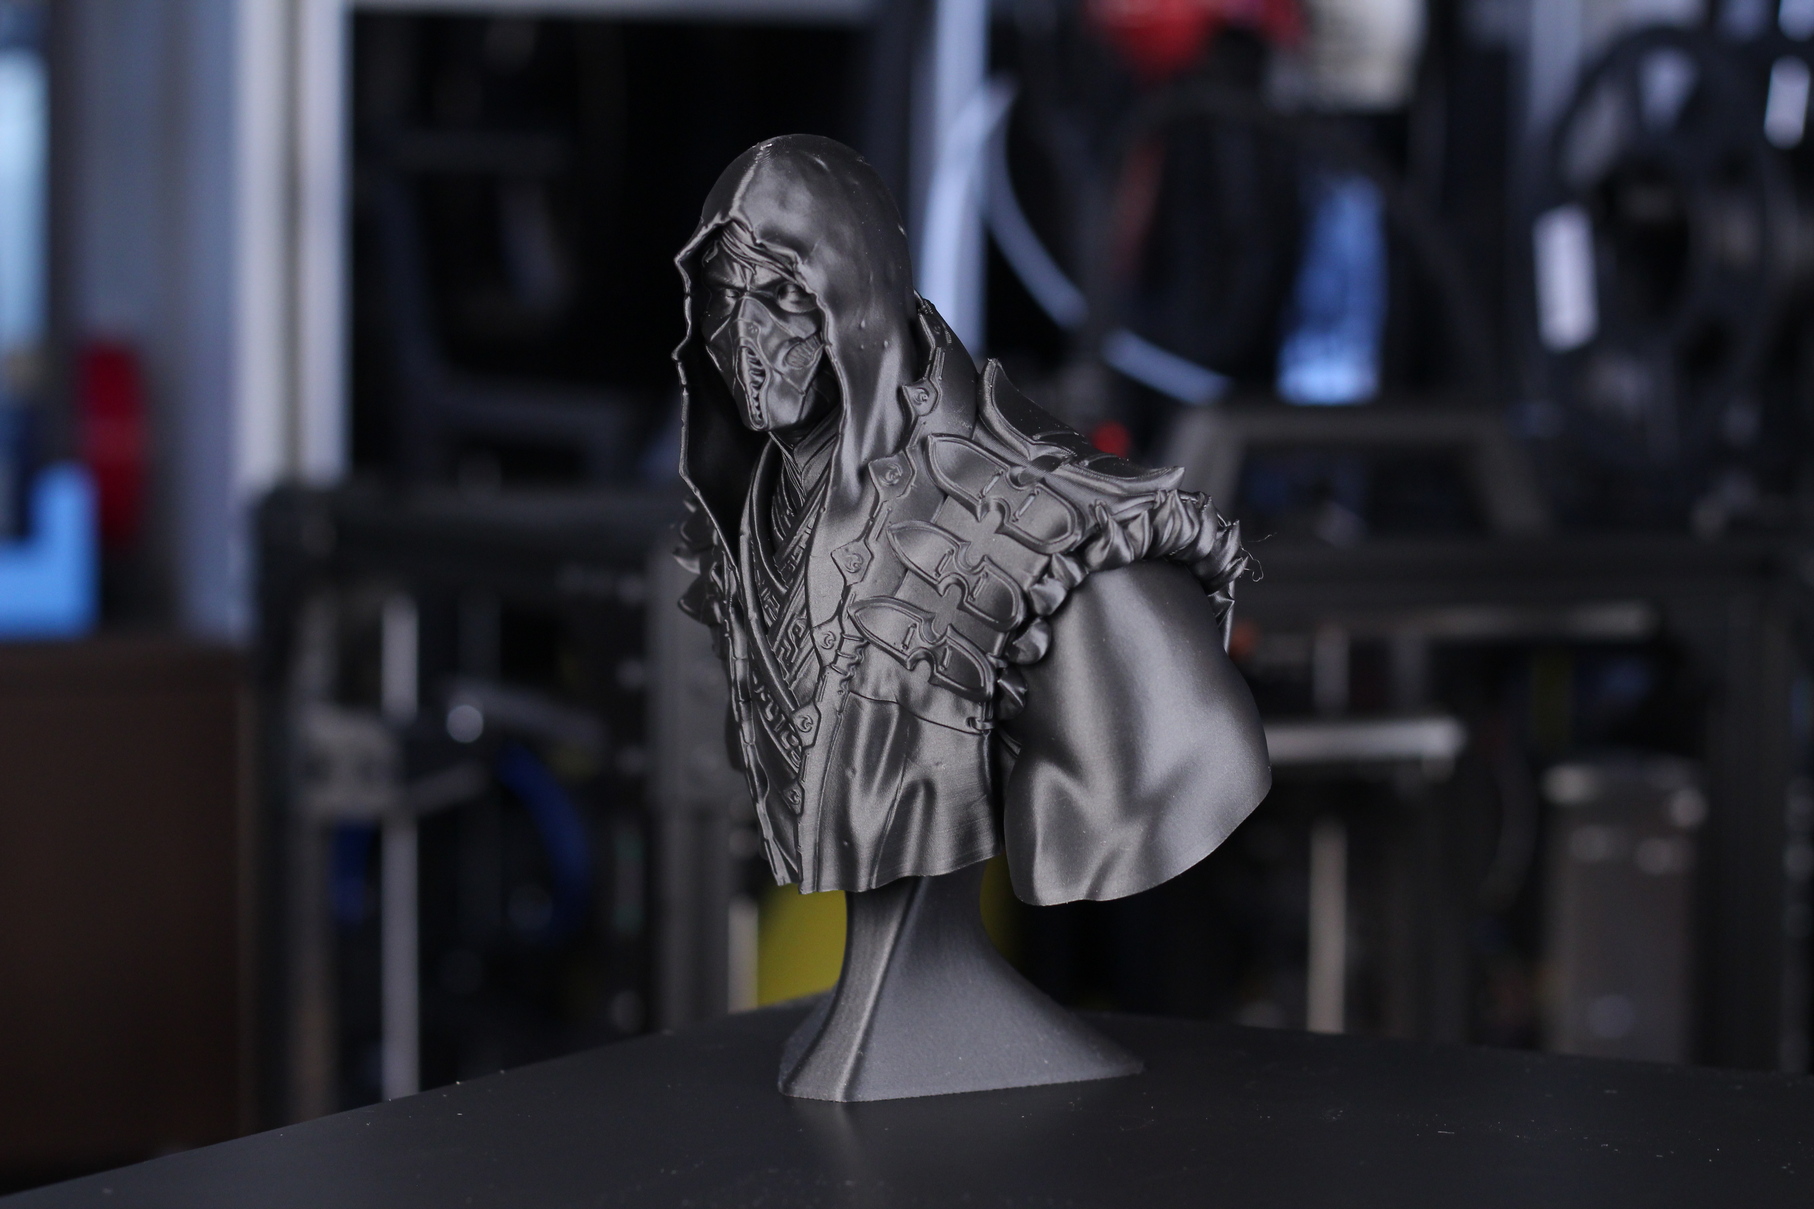 Scorpion Bust printed on the V Core 3 4 | RatRig V-Core 3 Review: Premium CoreXY 3D Printer Kit